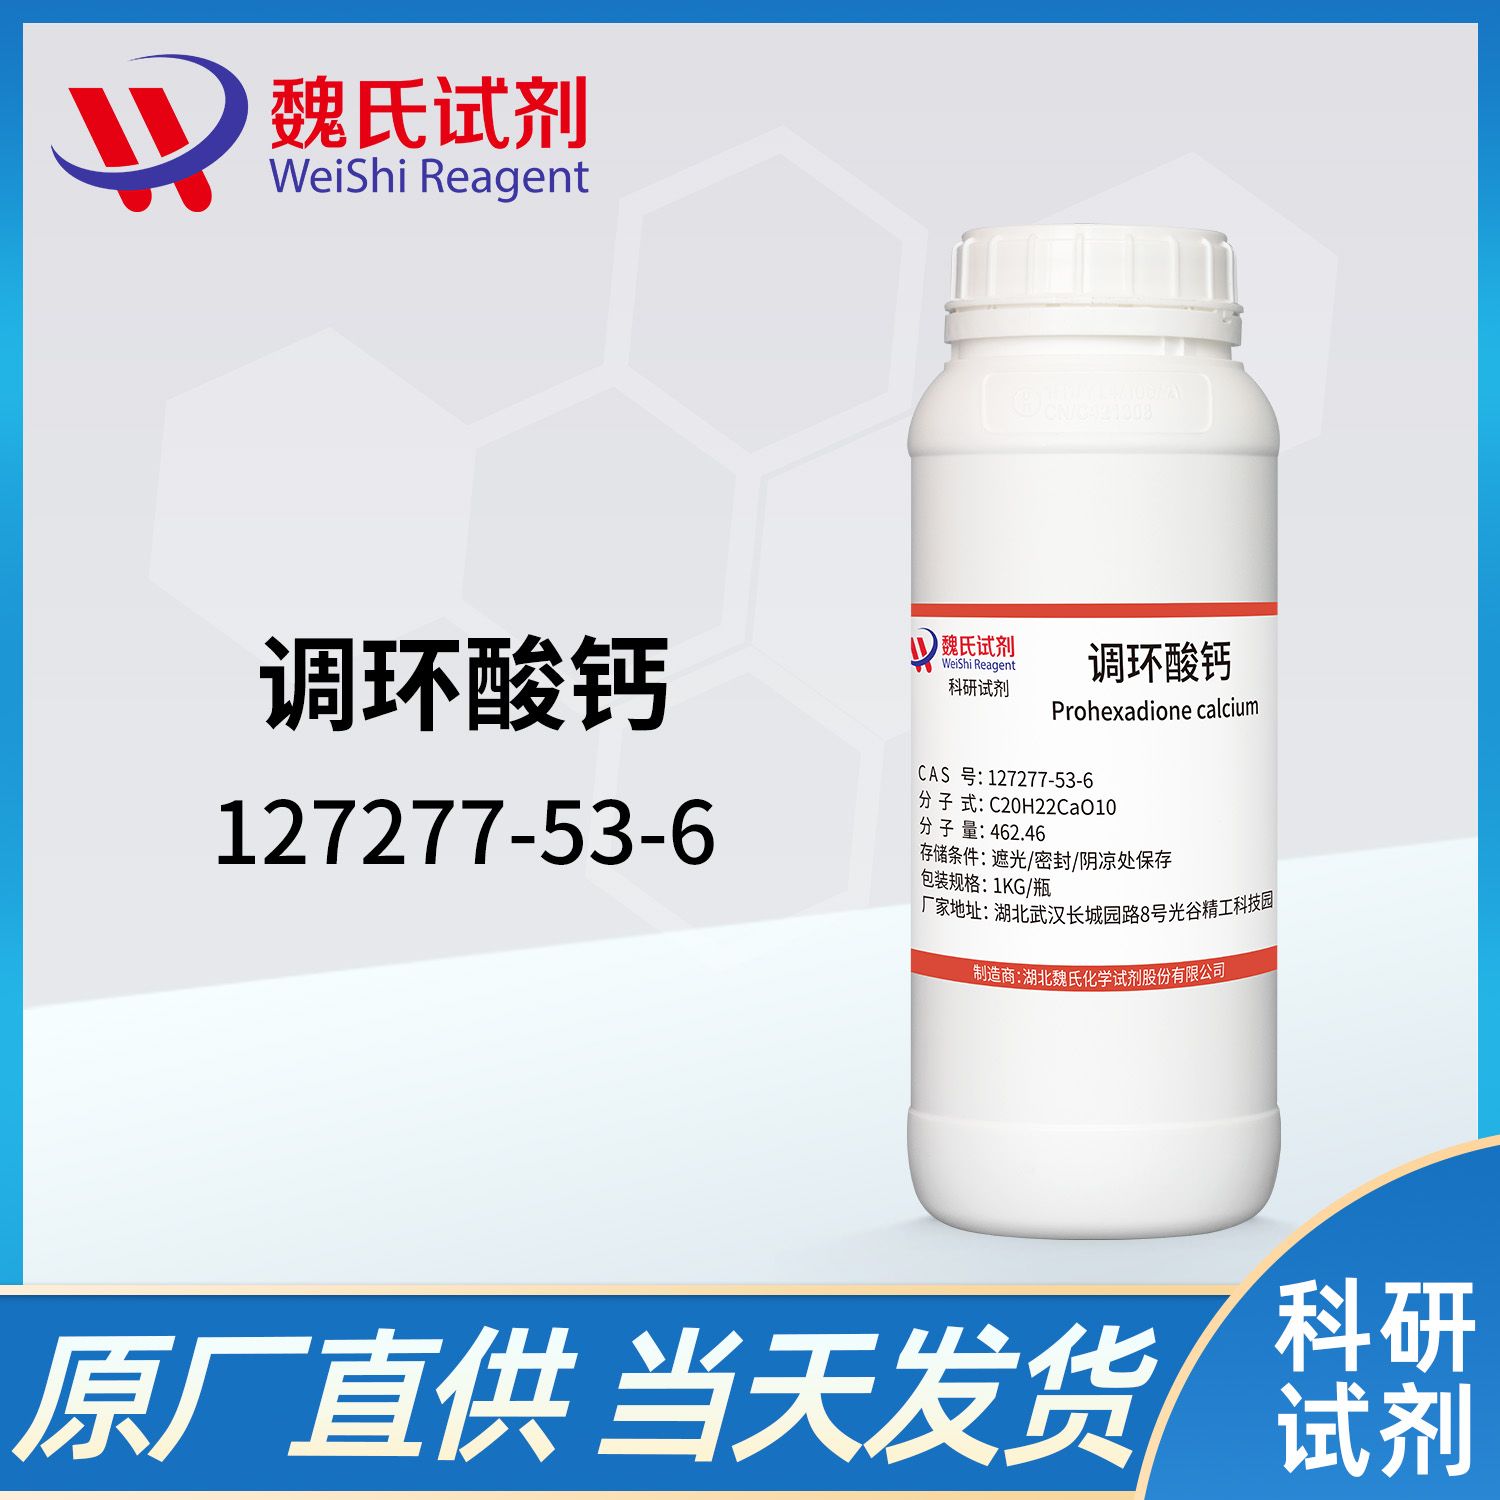 127277-53-6 /调环酸钙/Prohexadione calcium